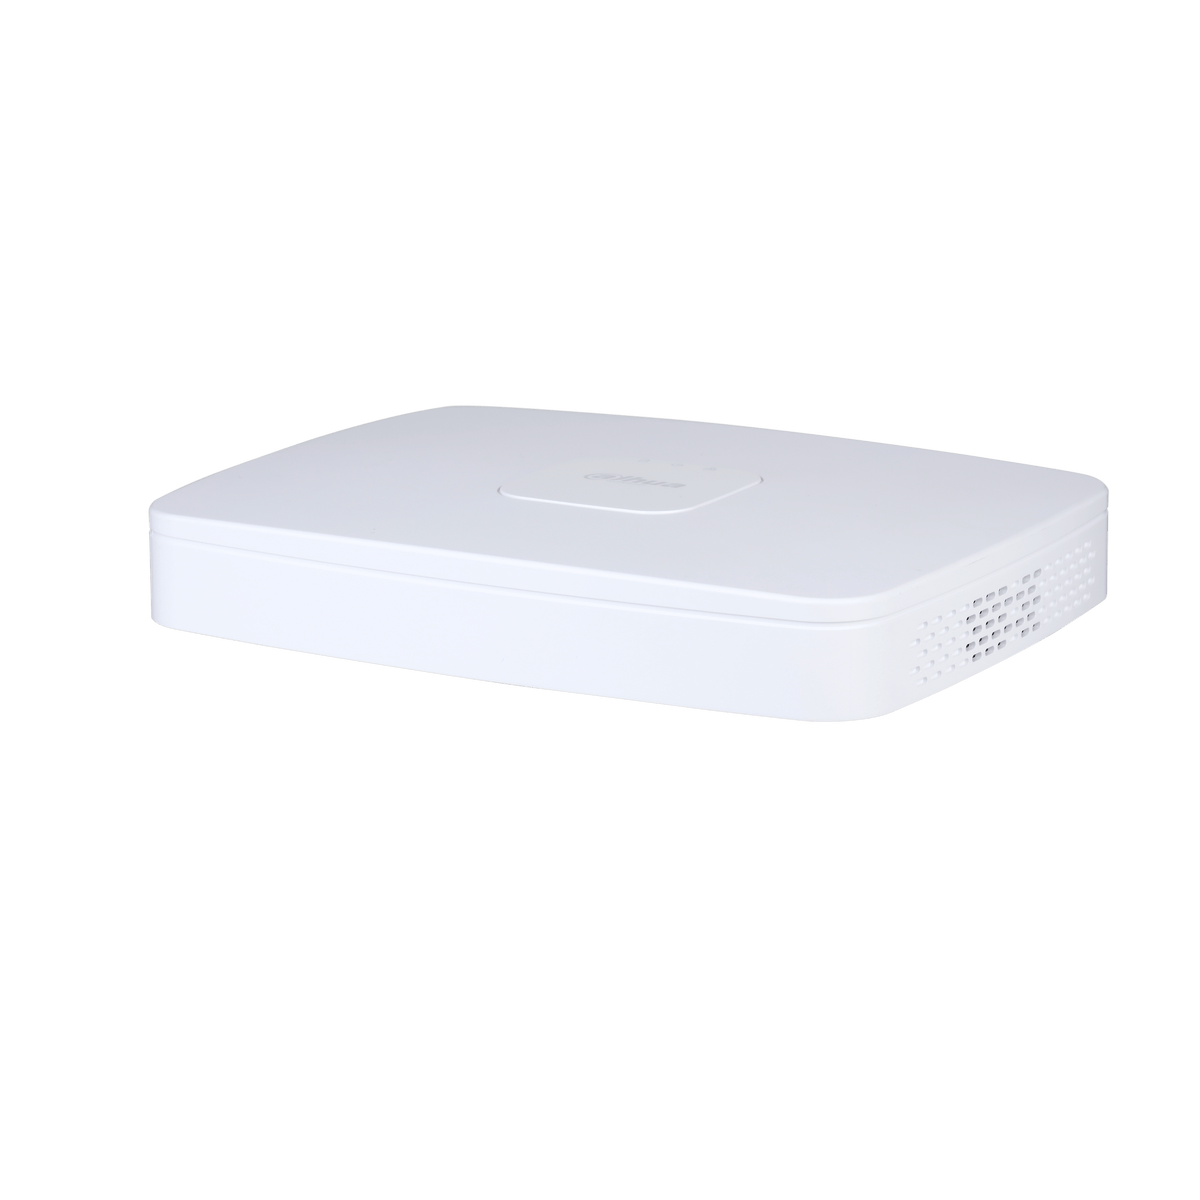 DAHUA NVR4116-8P-4KS2/L 16 Channel Smart 1U 1HDD 8PoE Network Video Recorder